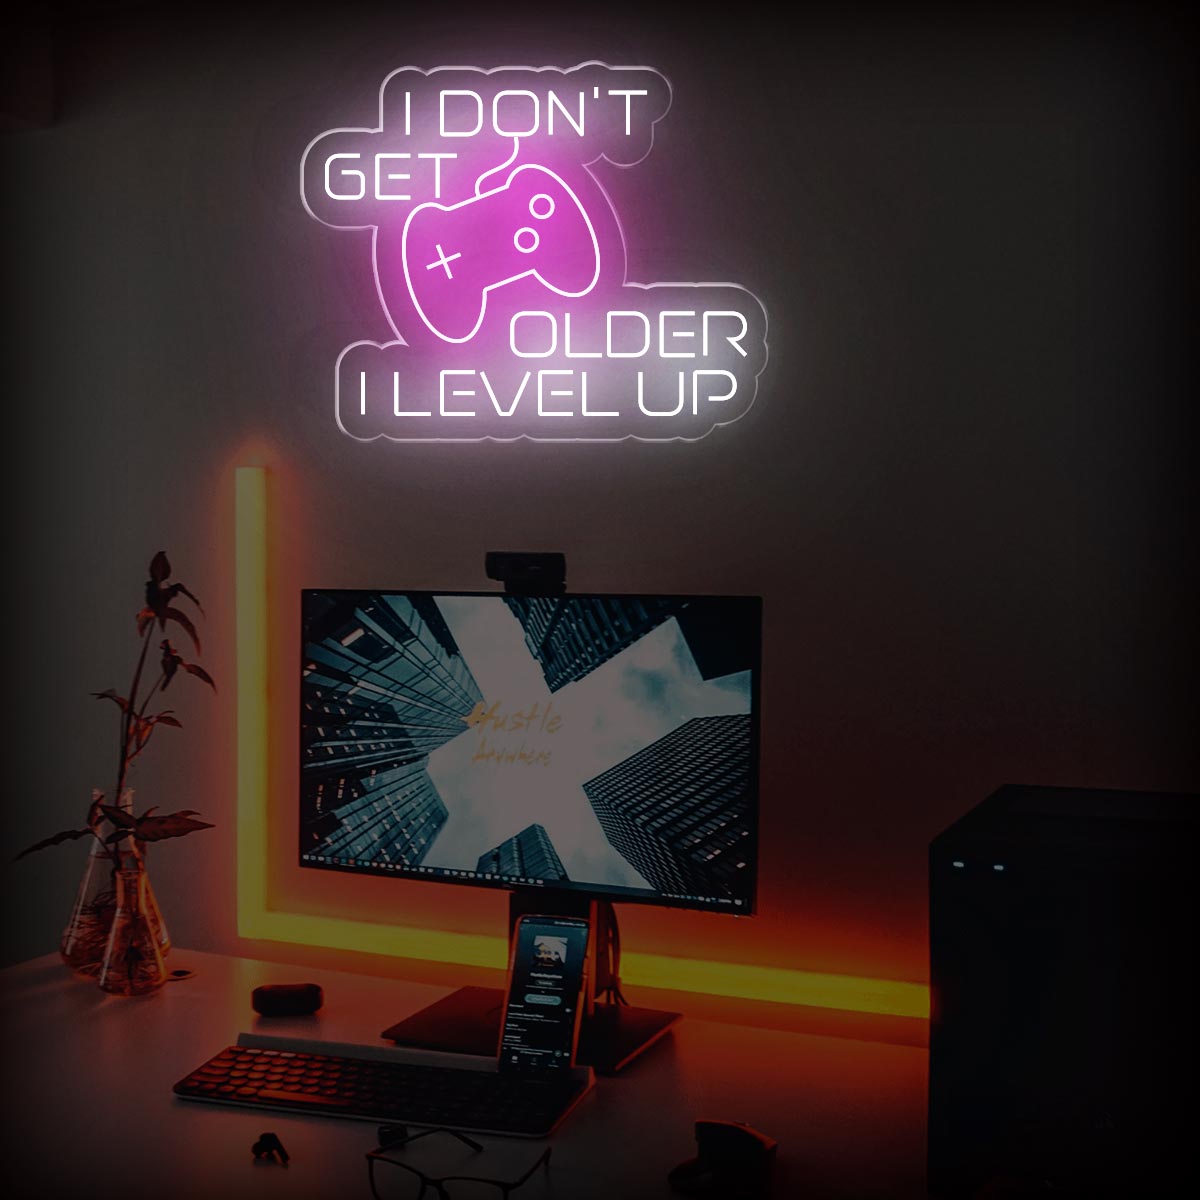 I Don't Get Older I Level Up - Game Room Neon Sign Decor - NEONXPERT